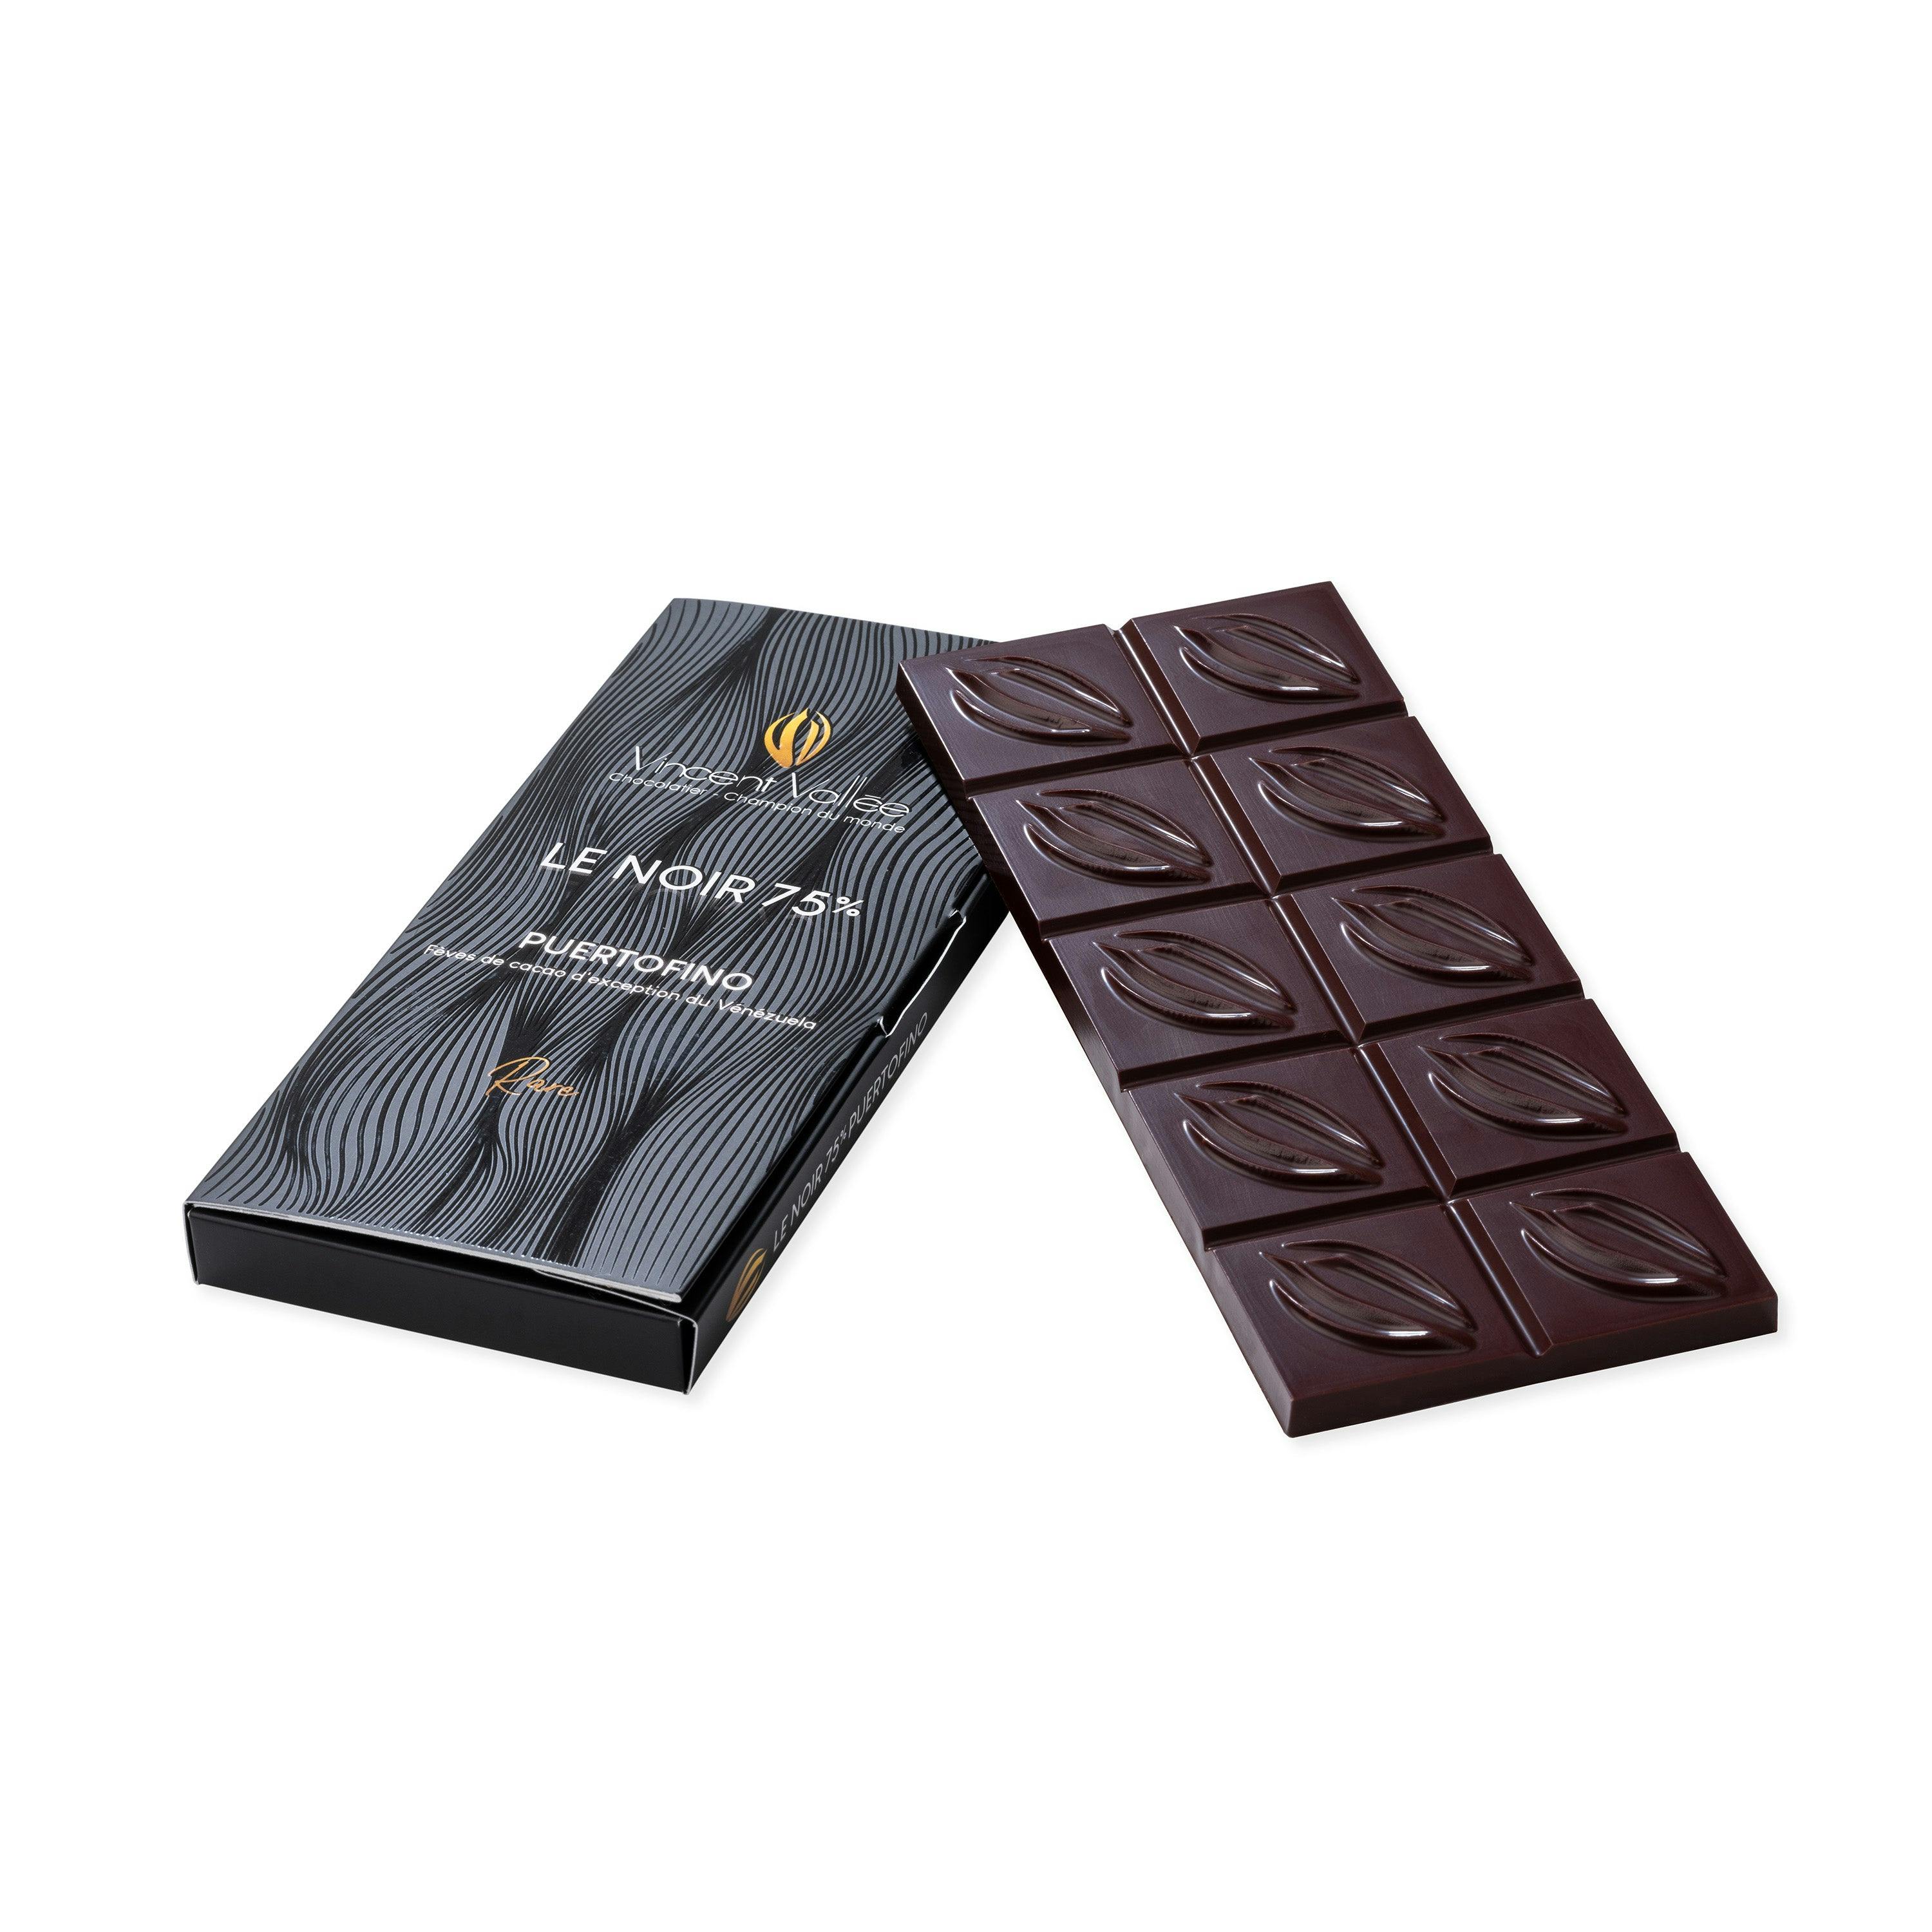 Puertofino 75% - Vincent Vallée chocolatier champion du monde